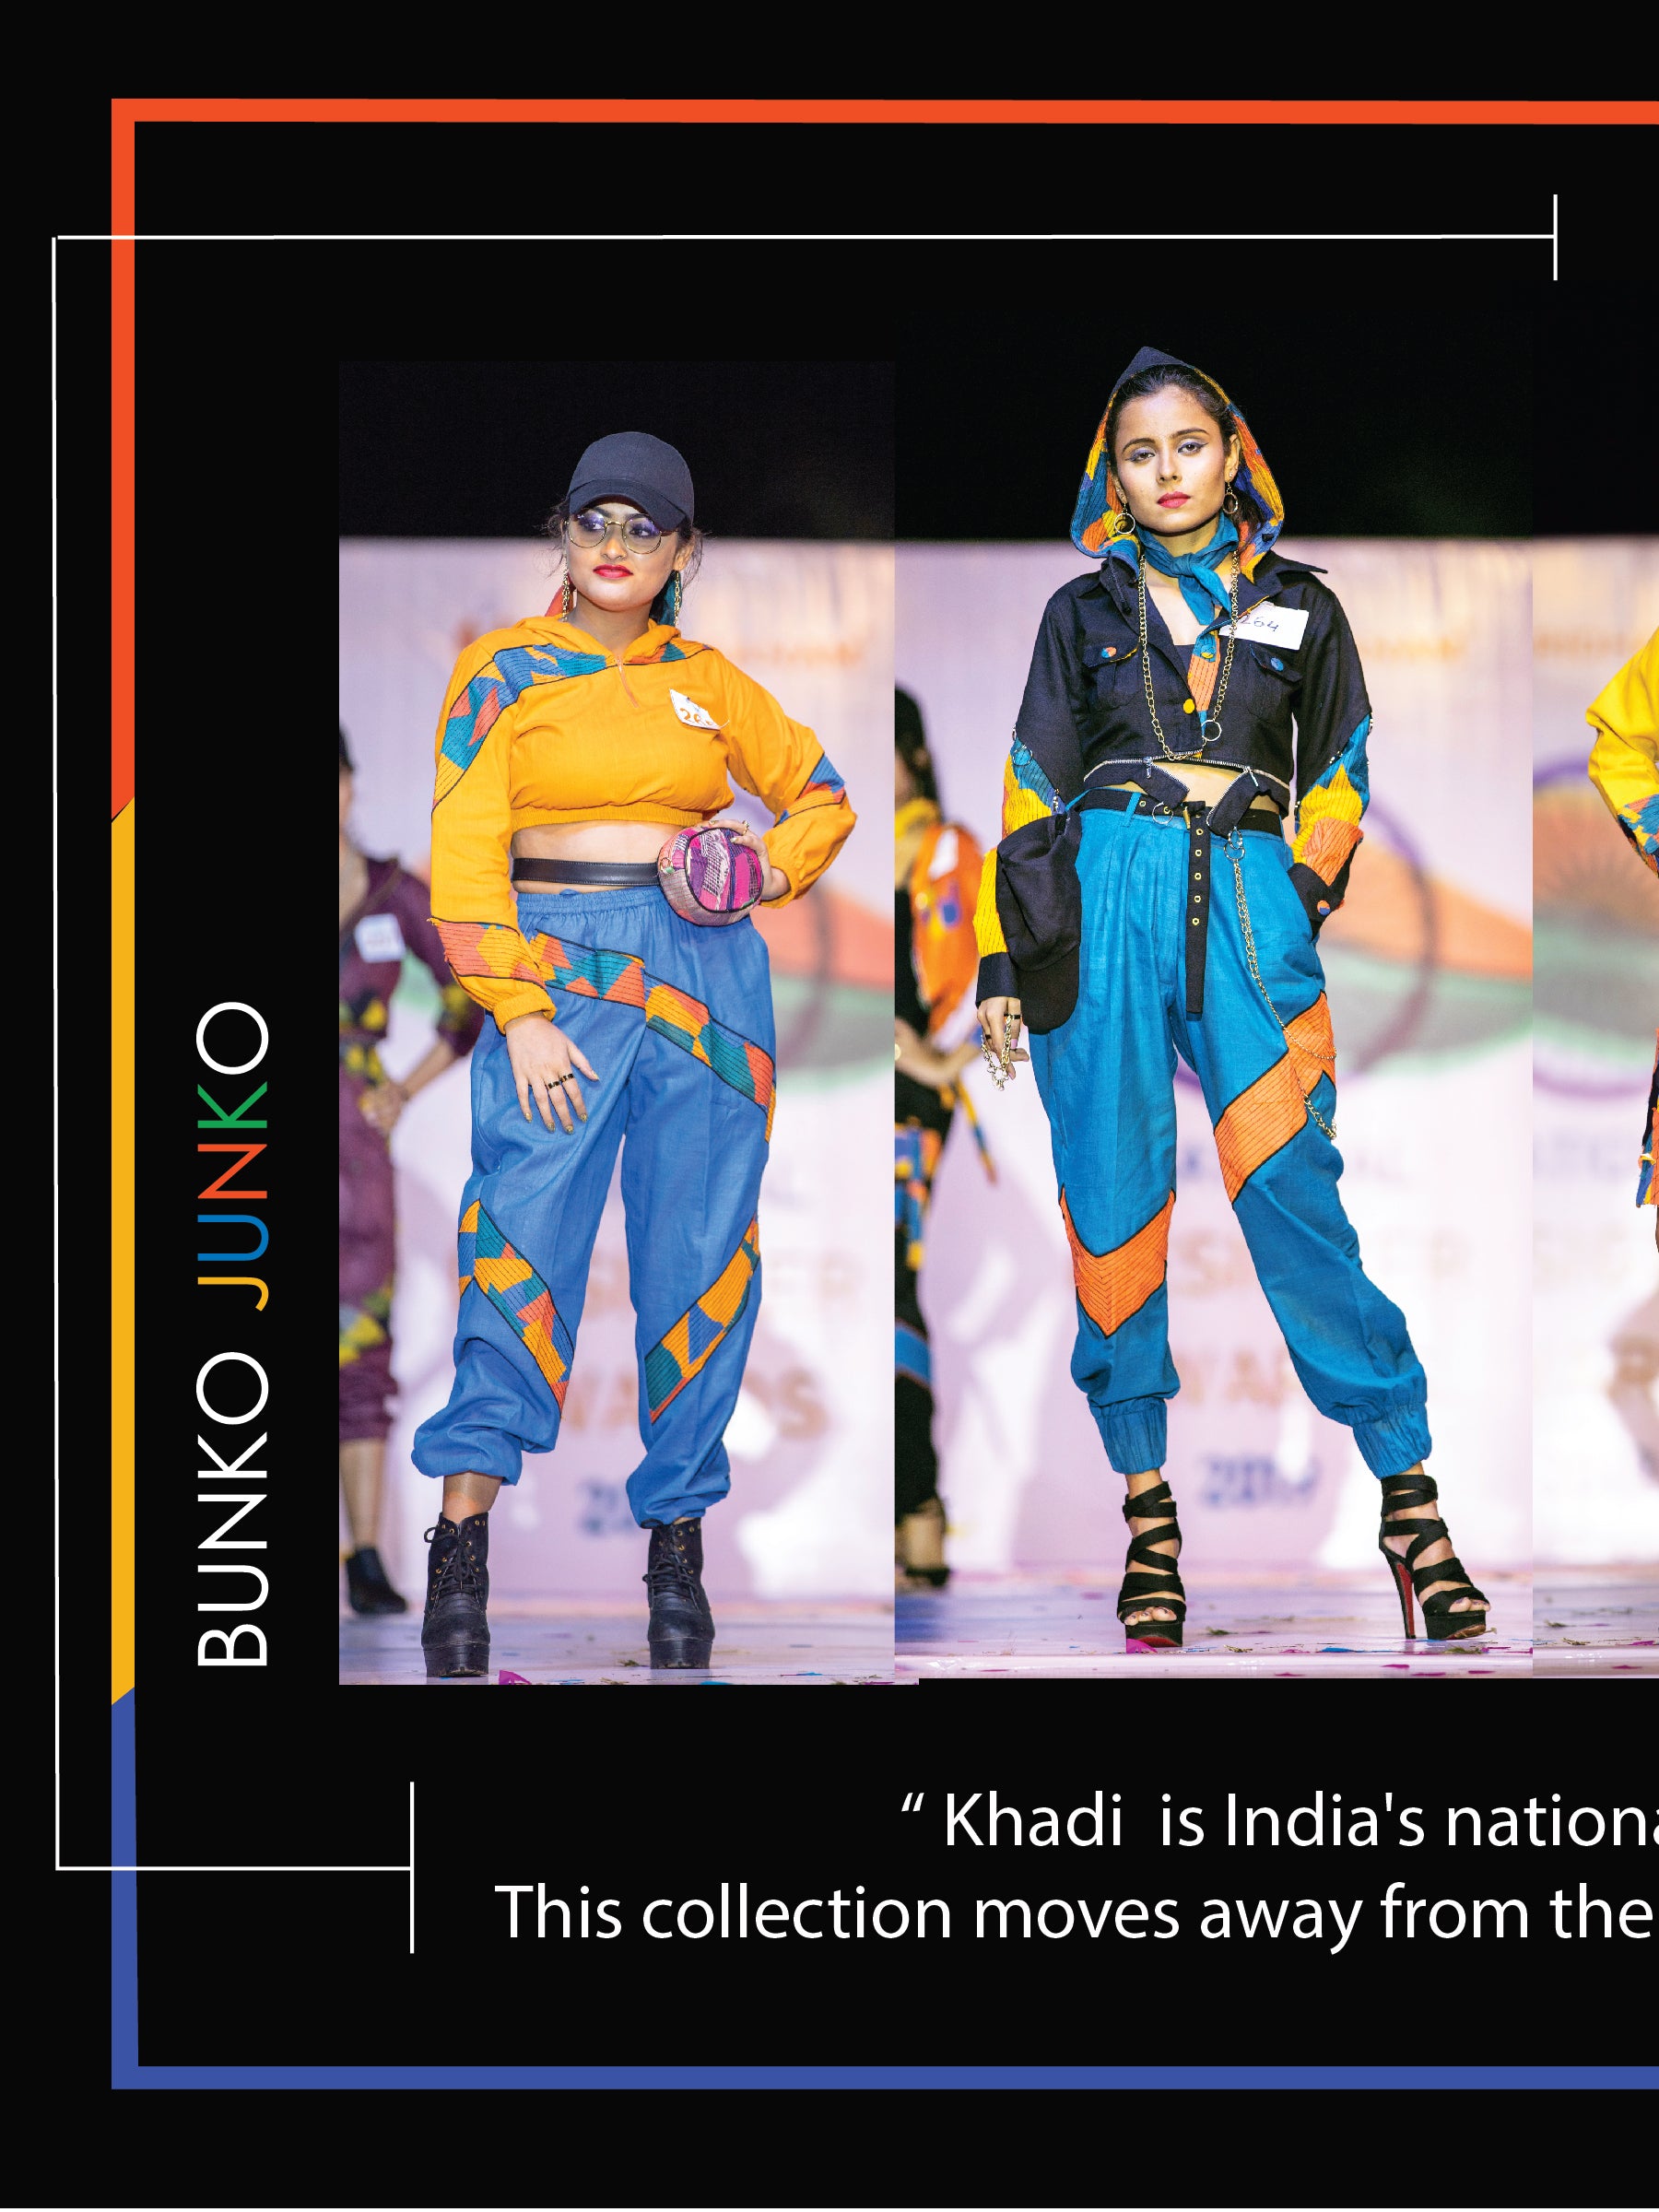 "Khadi Fashion Show - Upcycle Fashion in Goa by BunkoJunko: BunkoJunko's eco-friendly upcycled fashion collection featured in a Khadi fashion show in Goa."